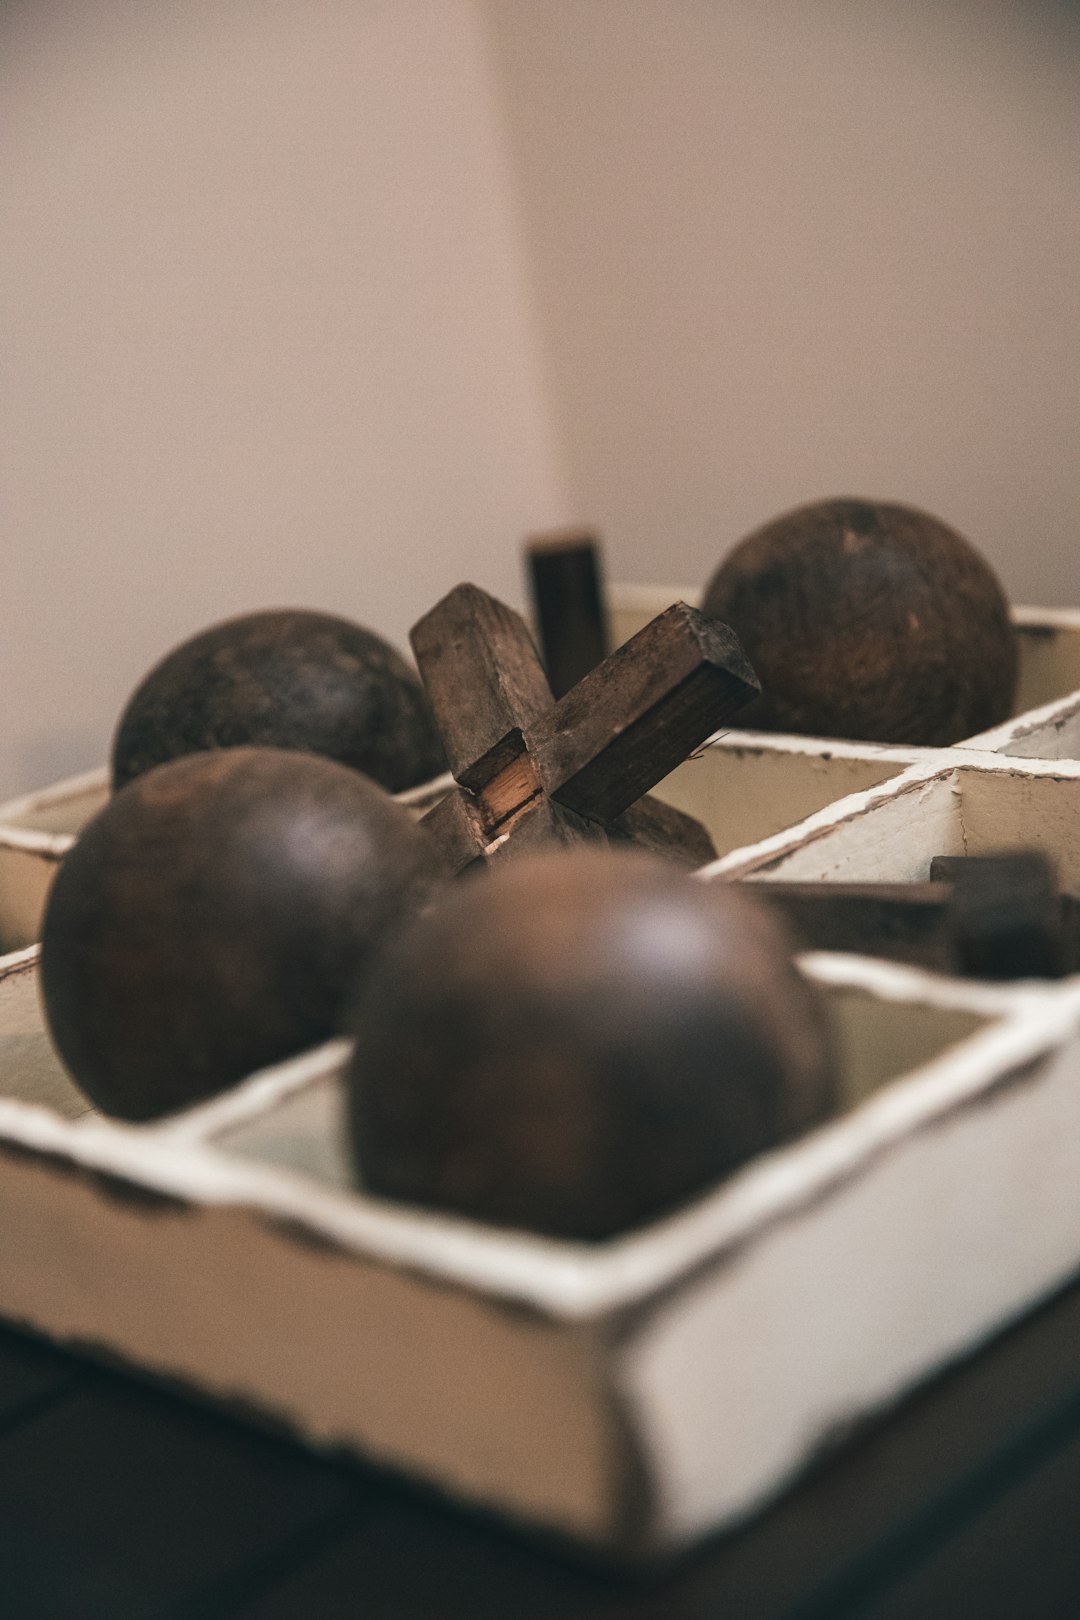 black round fruit on white wooden rack